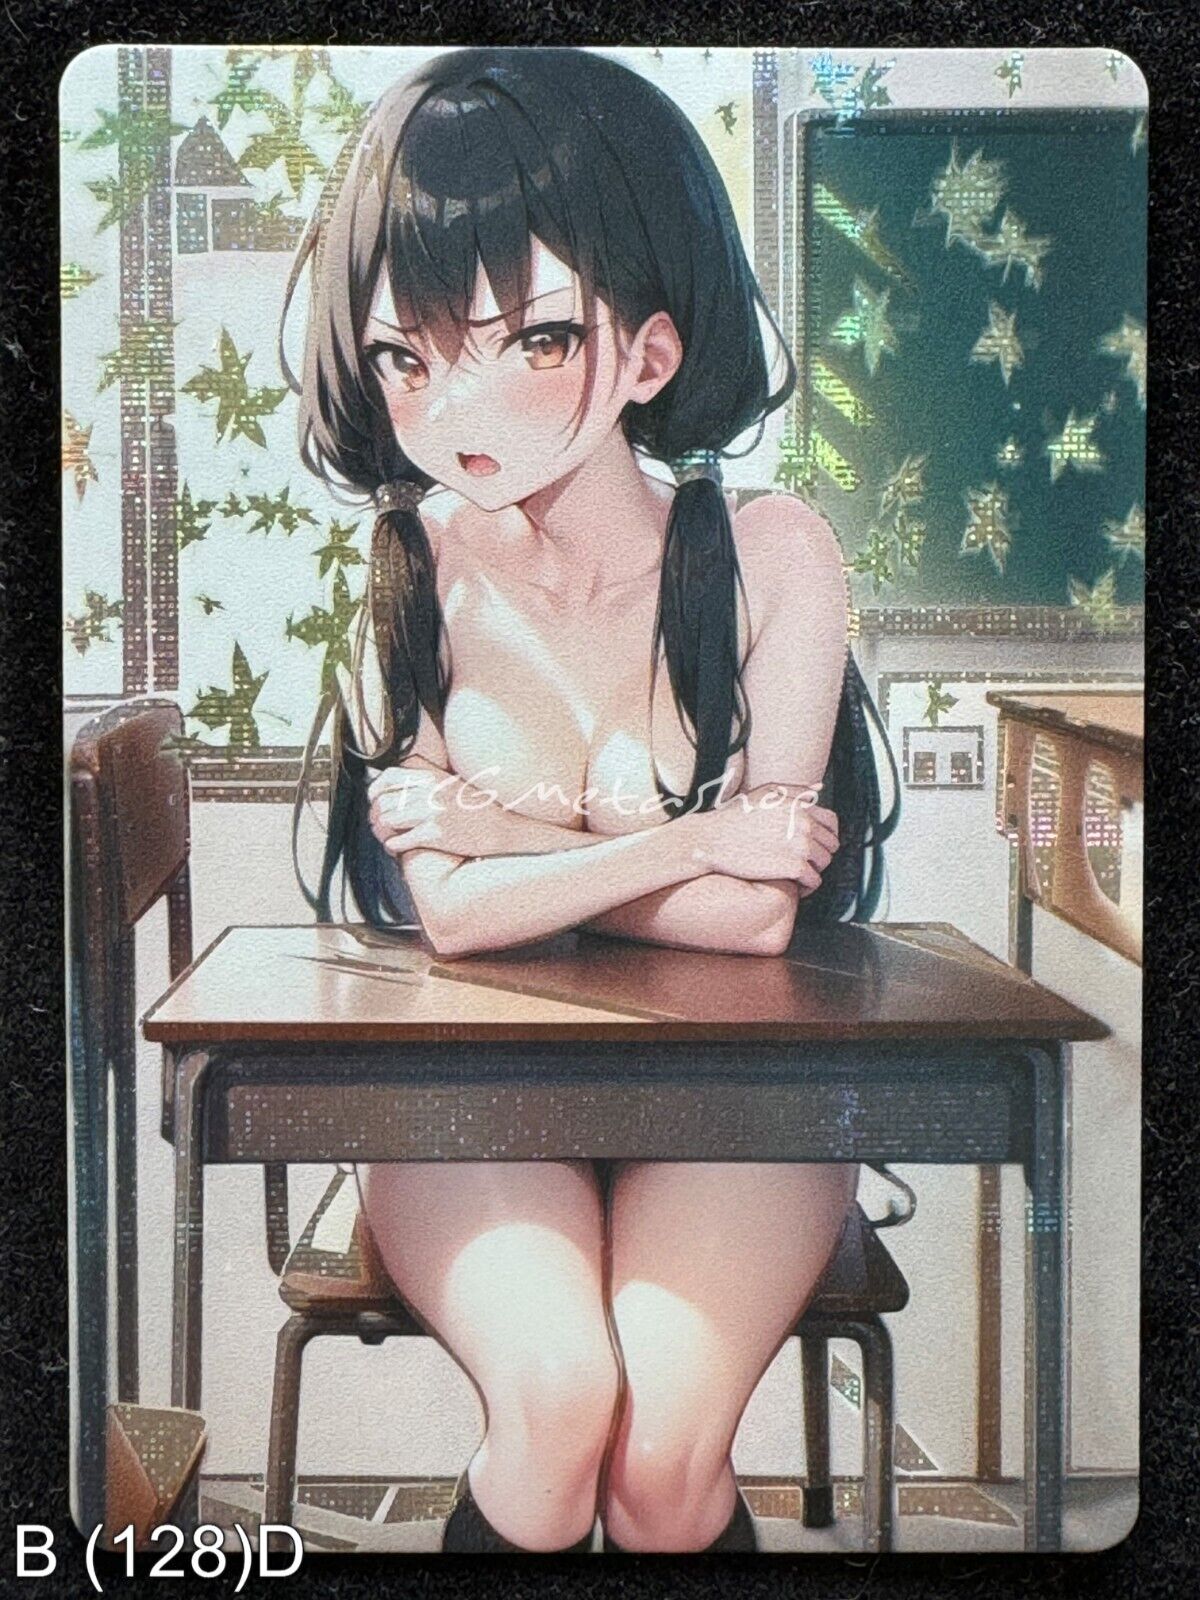 🔥 Cute Girl Goddess Story Anime Waifu Card ACG DUAL B 128 🔥